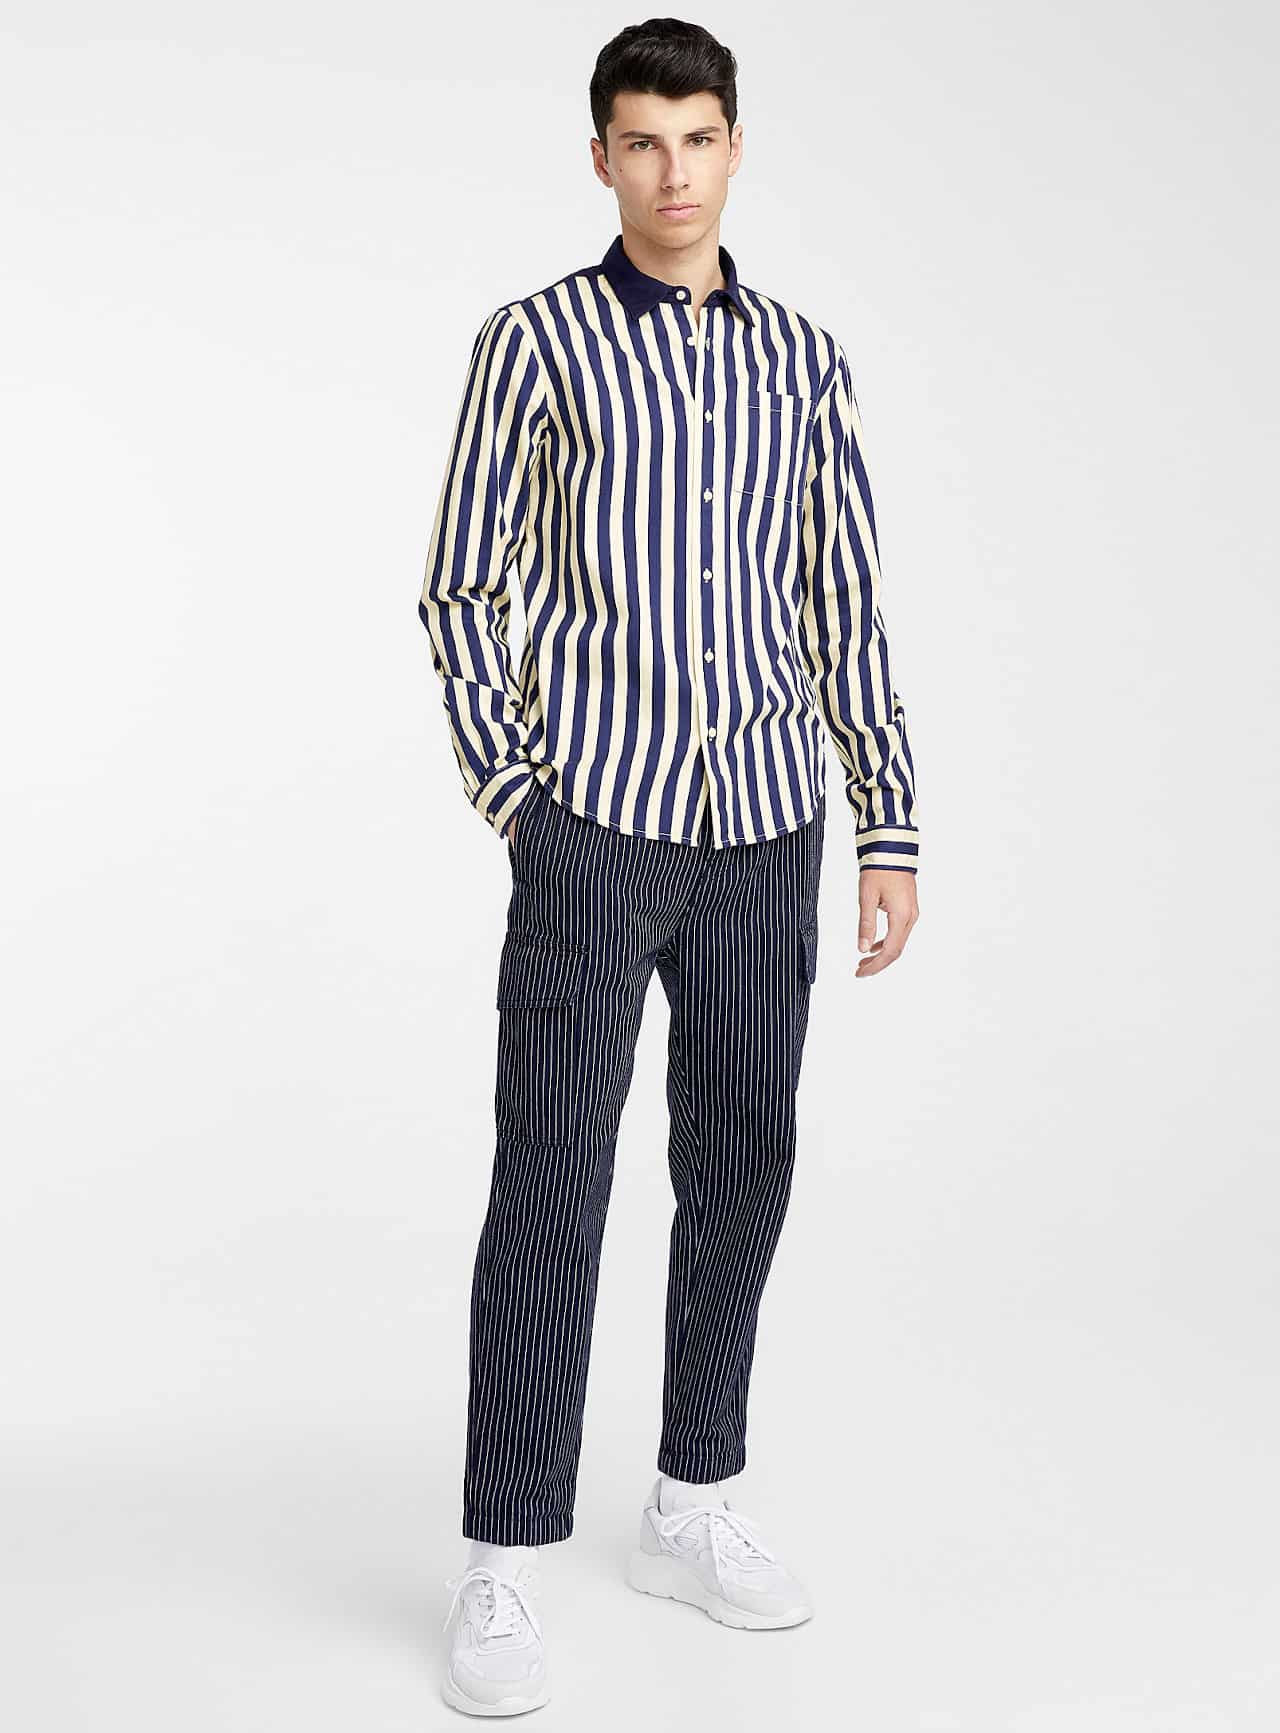 Male model men's striped shirt black stripes